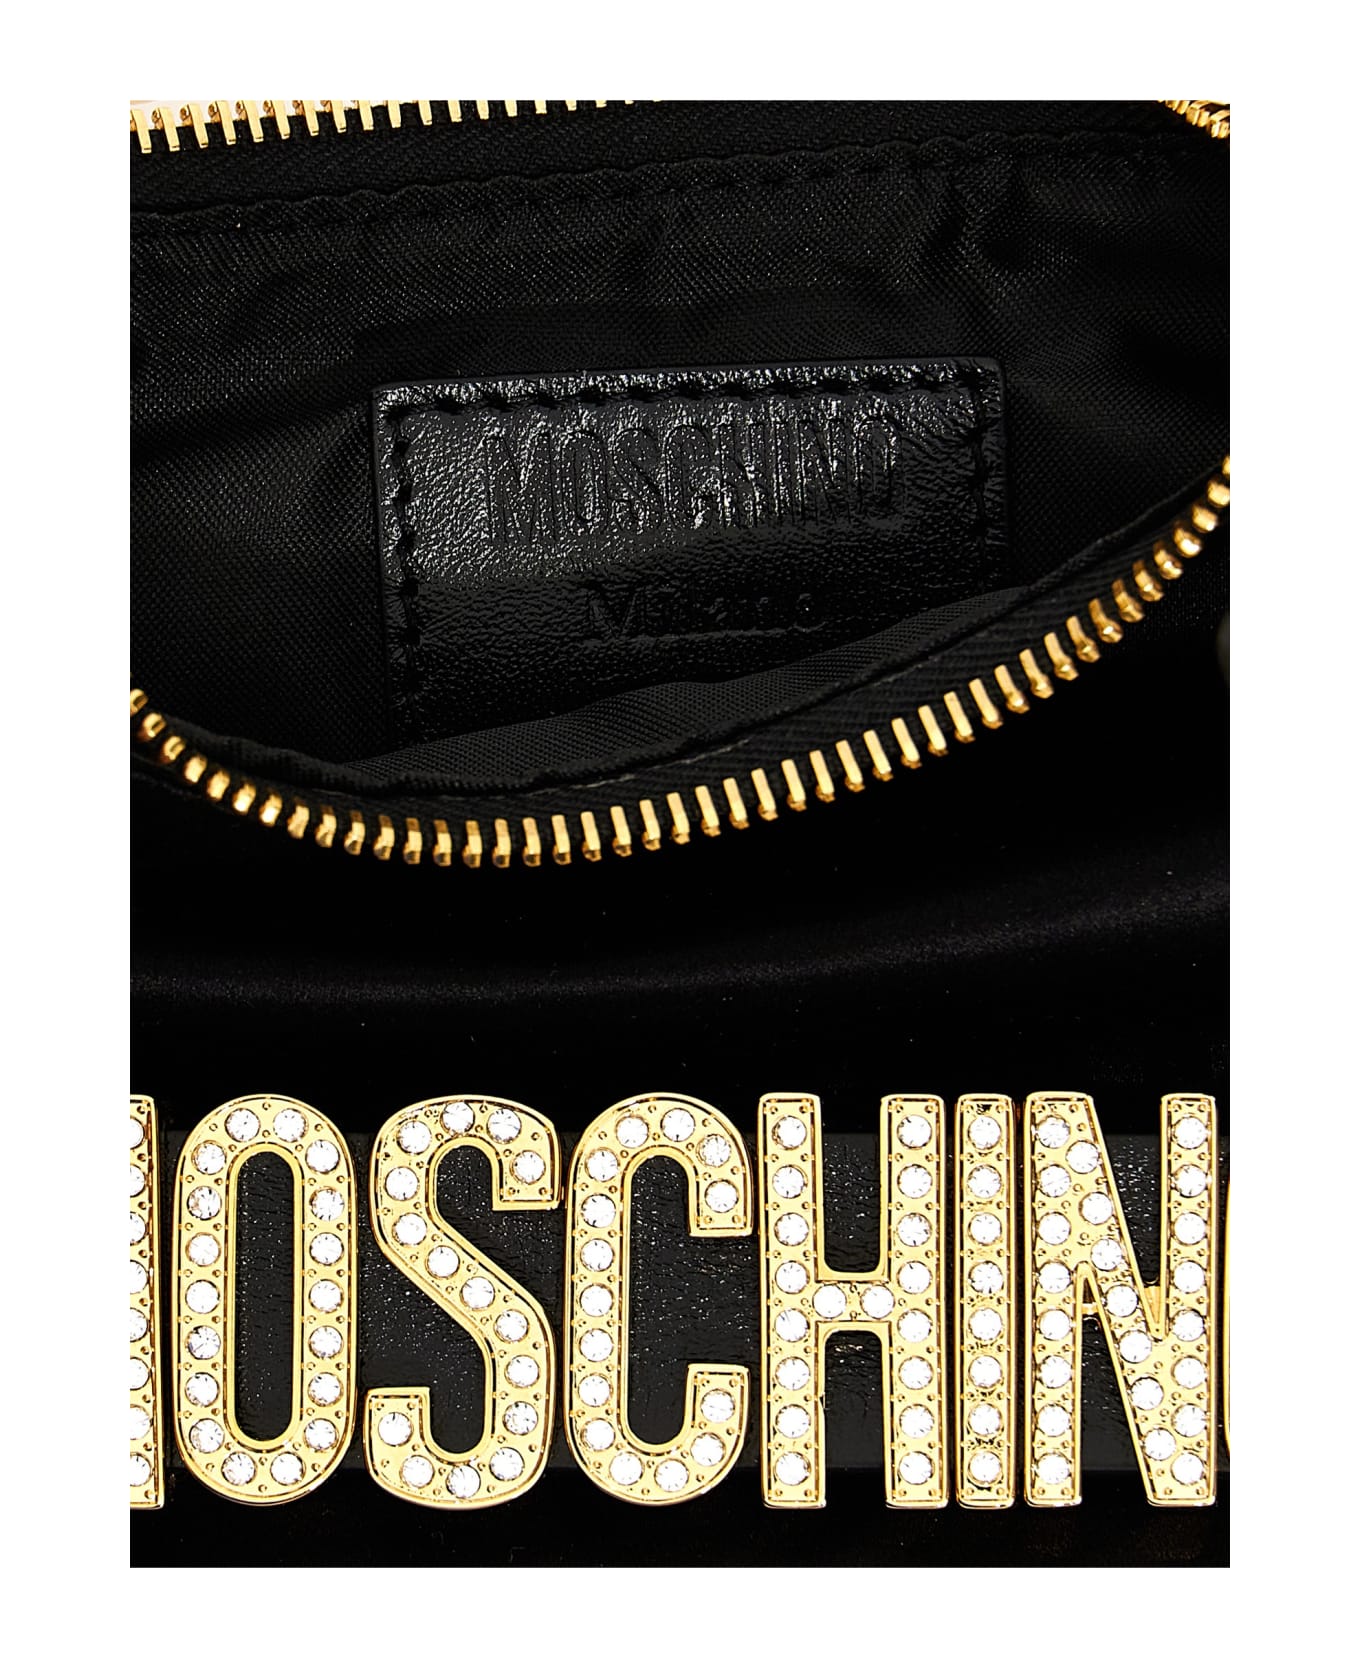 Moschino Logo Handbag - Black   トートバッグ